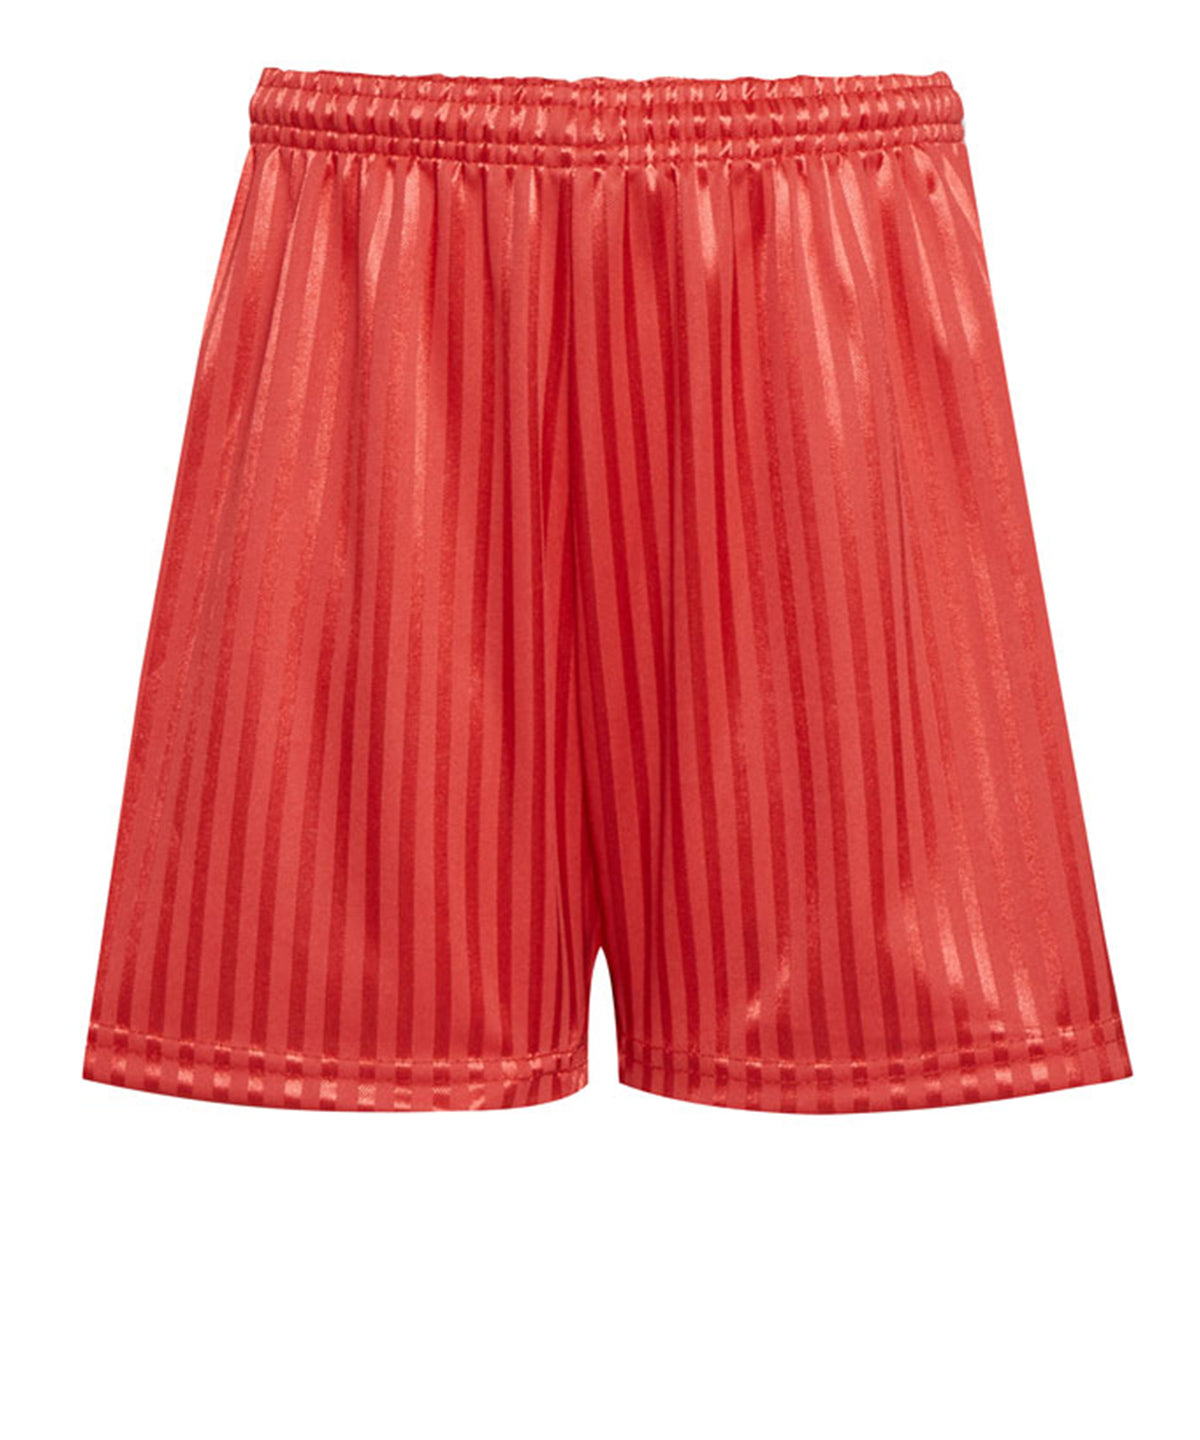 Red - Sports Shorts - Shadow Stripe - School Uniform Shop